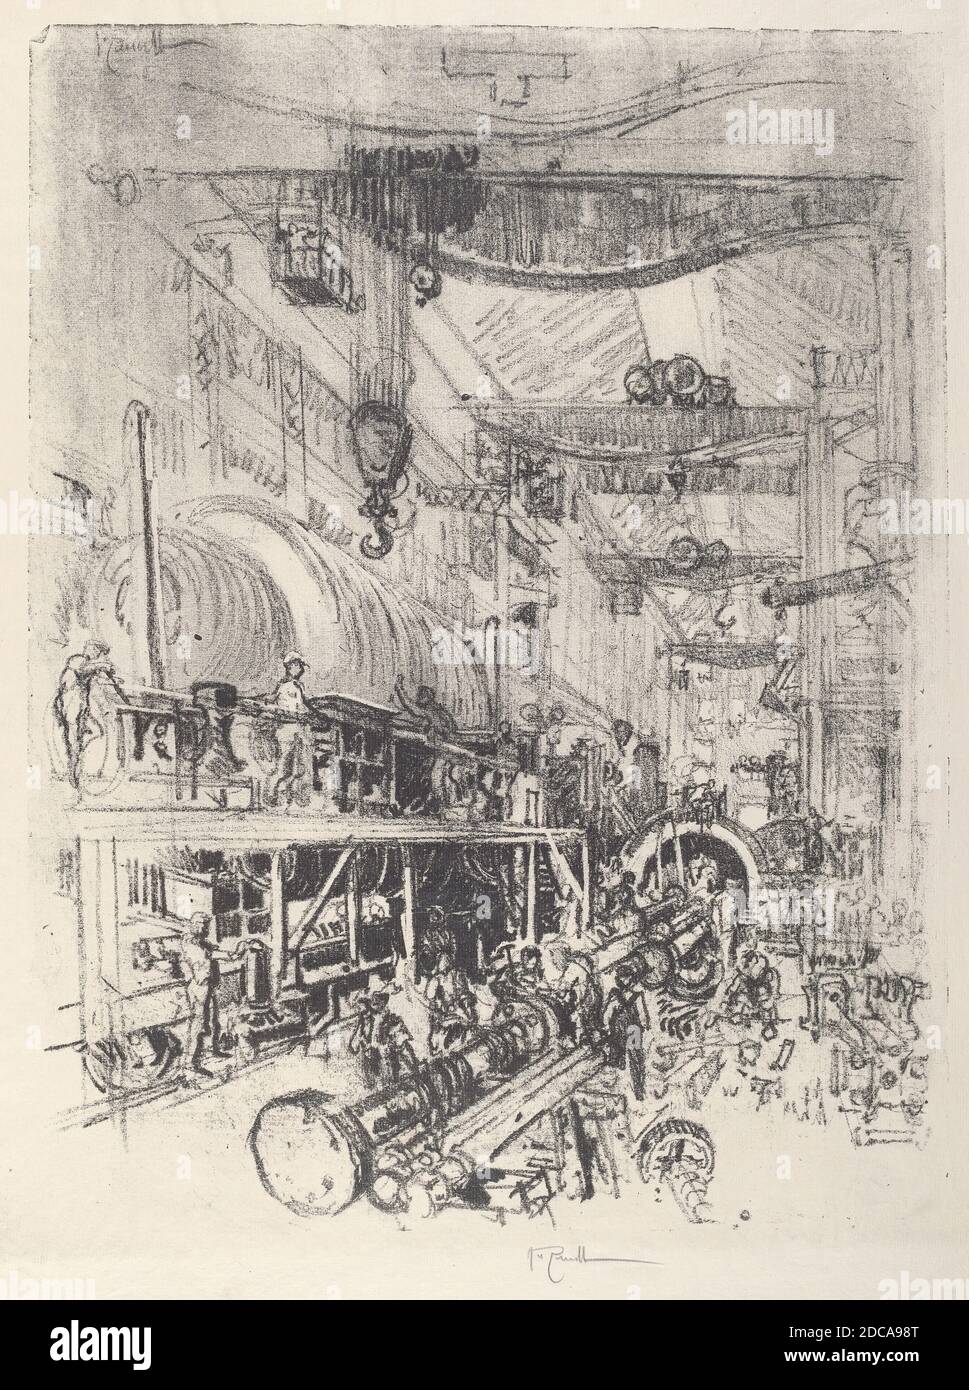 Joseph Pennell, (artist), American, 1857 - 1926, Making a Turbine Engine, American War Work, (series), 1917, lithograph Stock Photo